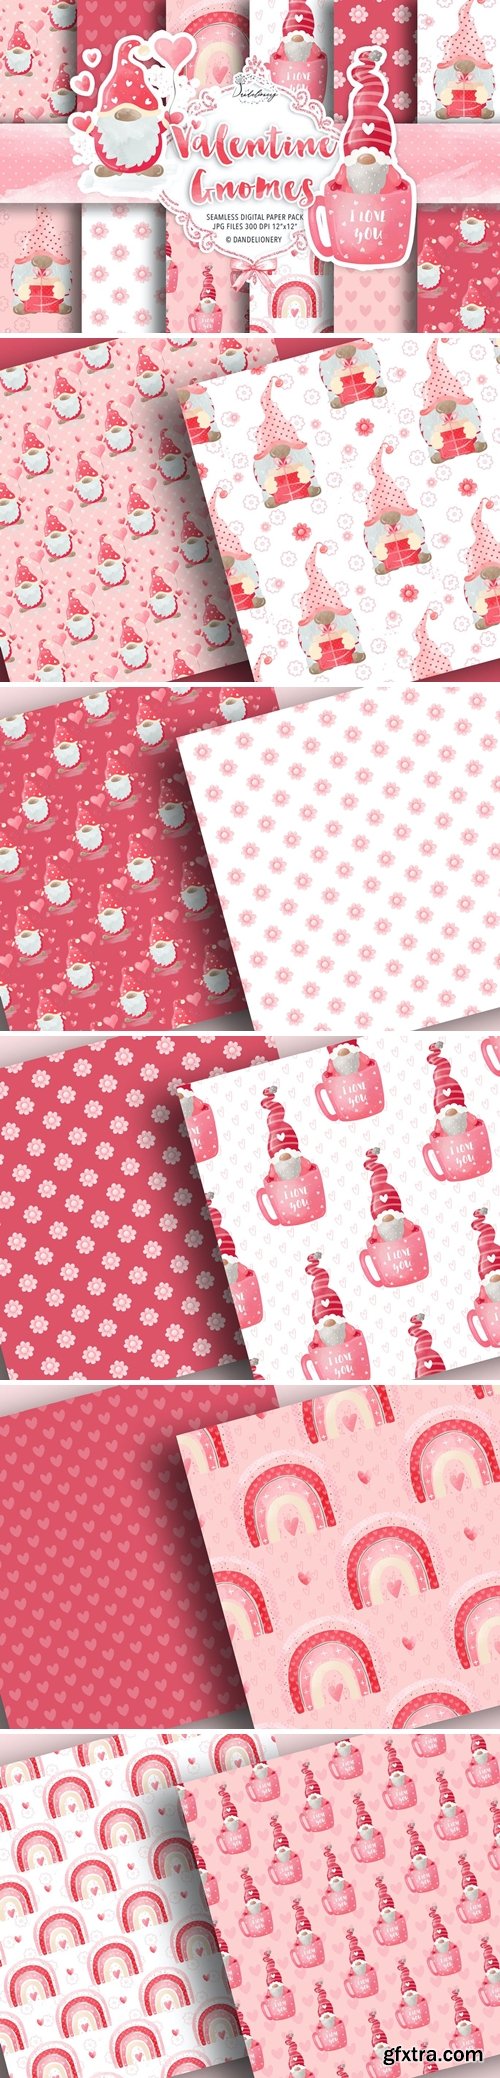 Valentine Gnomes digital paper pack